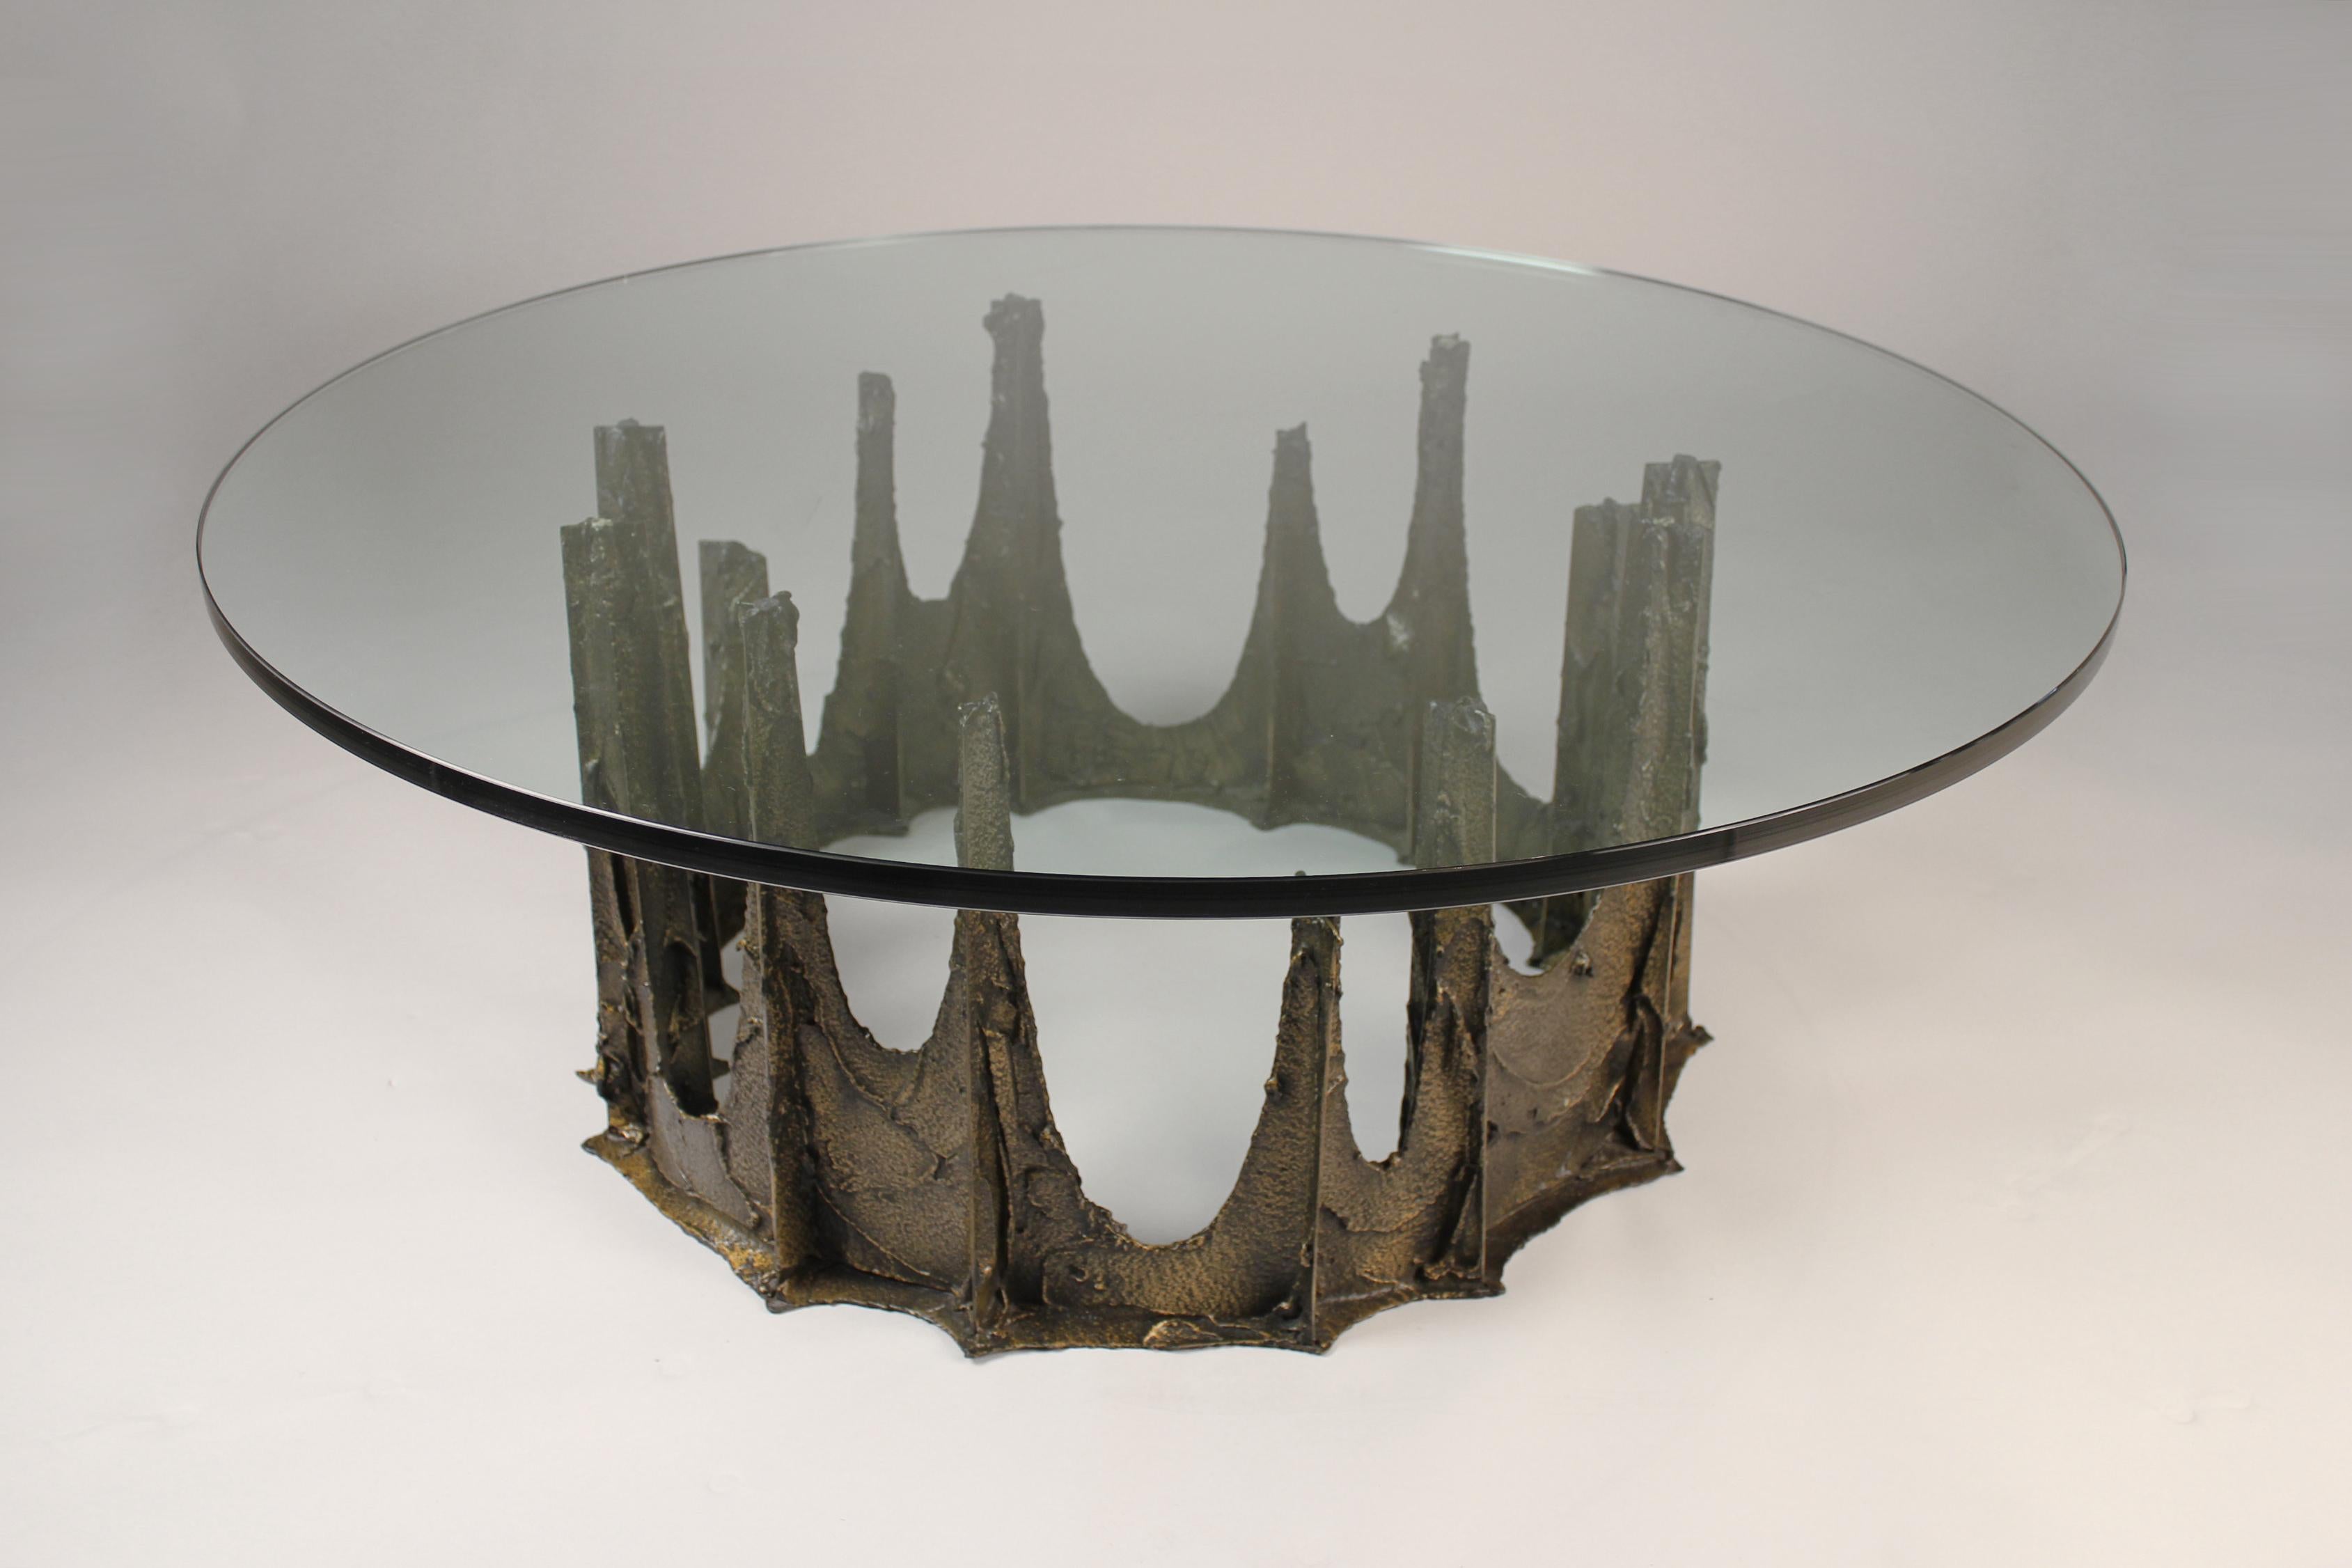 20th Century Bronze Stalagmite Coffee Table Designed by Paul Evans, circa 1972